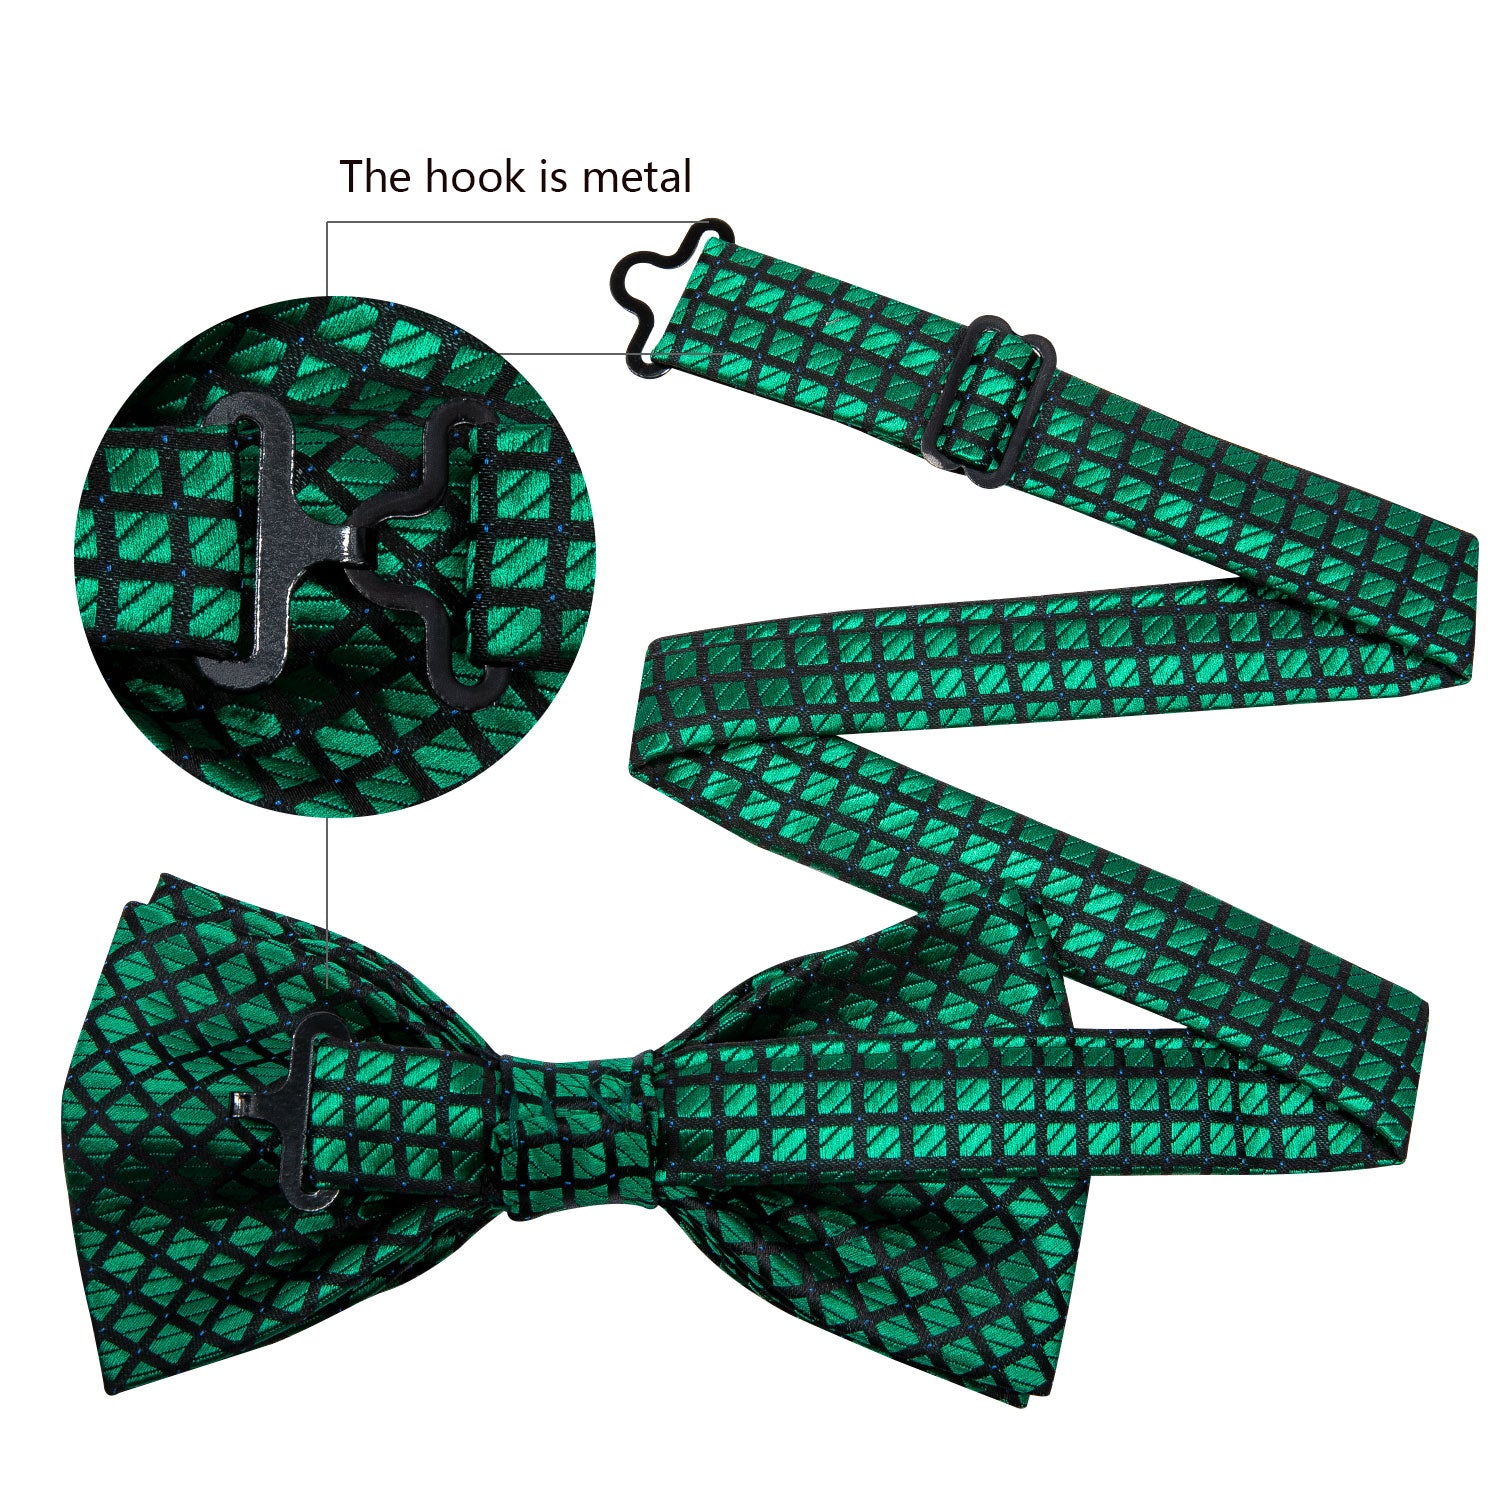 Green Plaid Pre-tied Bow Tie Hanky Cufflinks Set